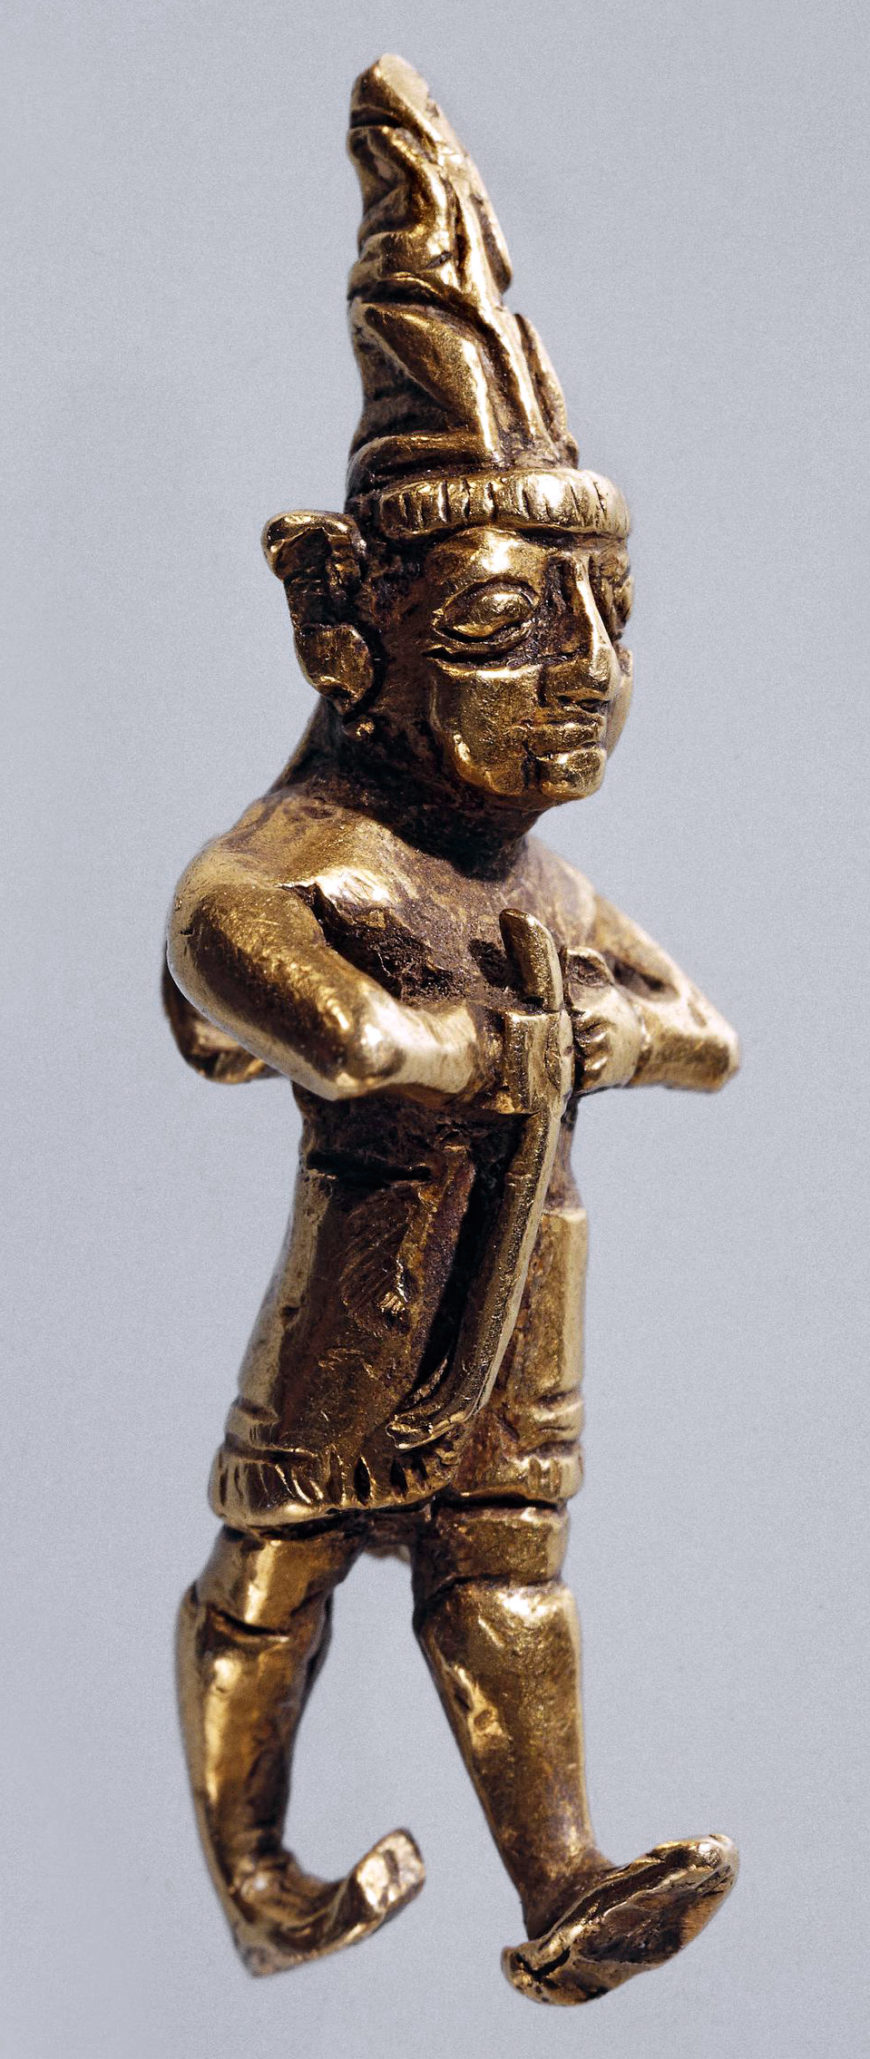 Gold figurine of a god Hittite, about 1400-1200 B.C.E. From Anatolia (modern Turkey), 3.94 cm high